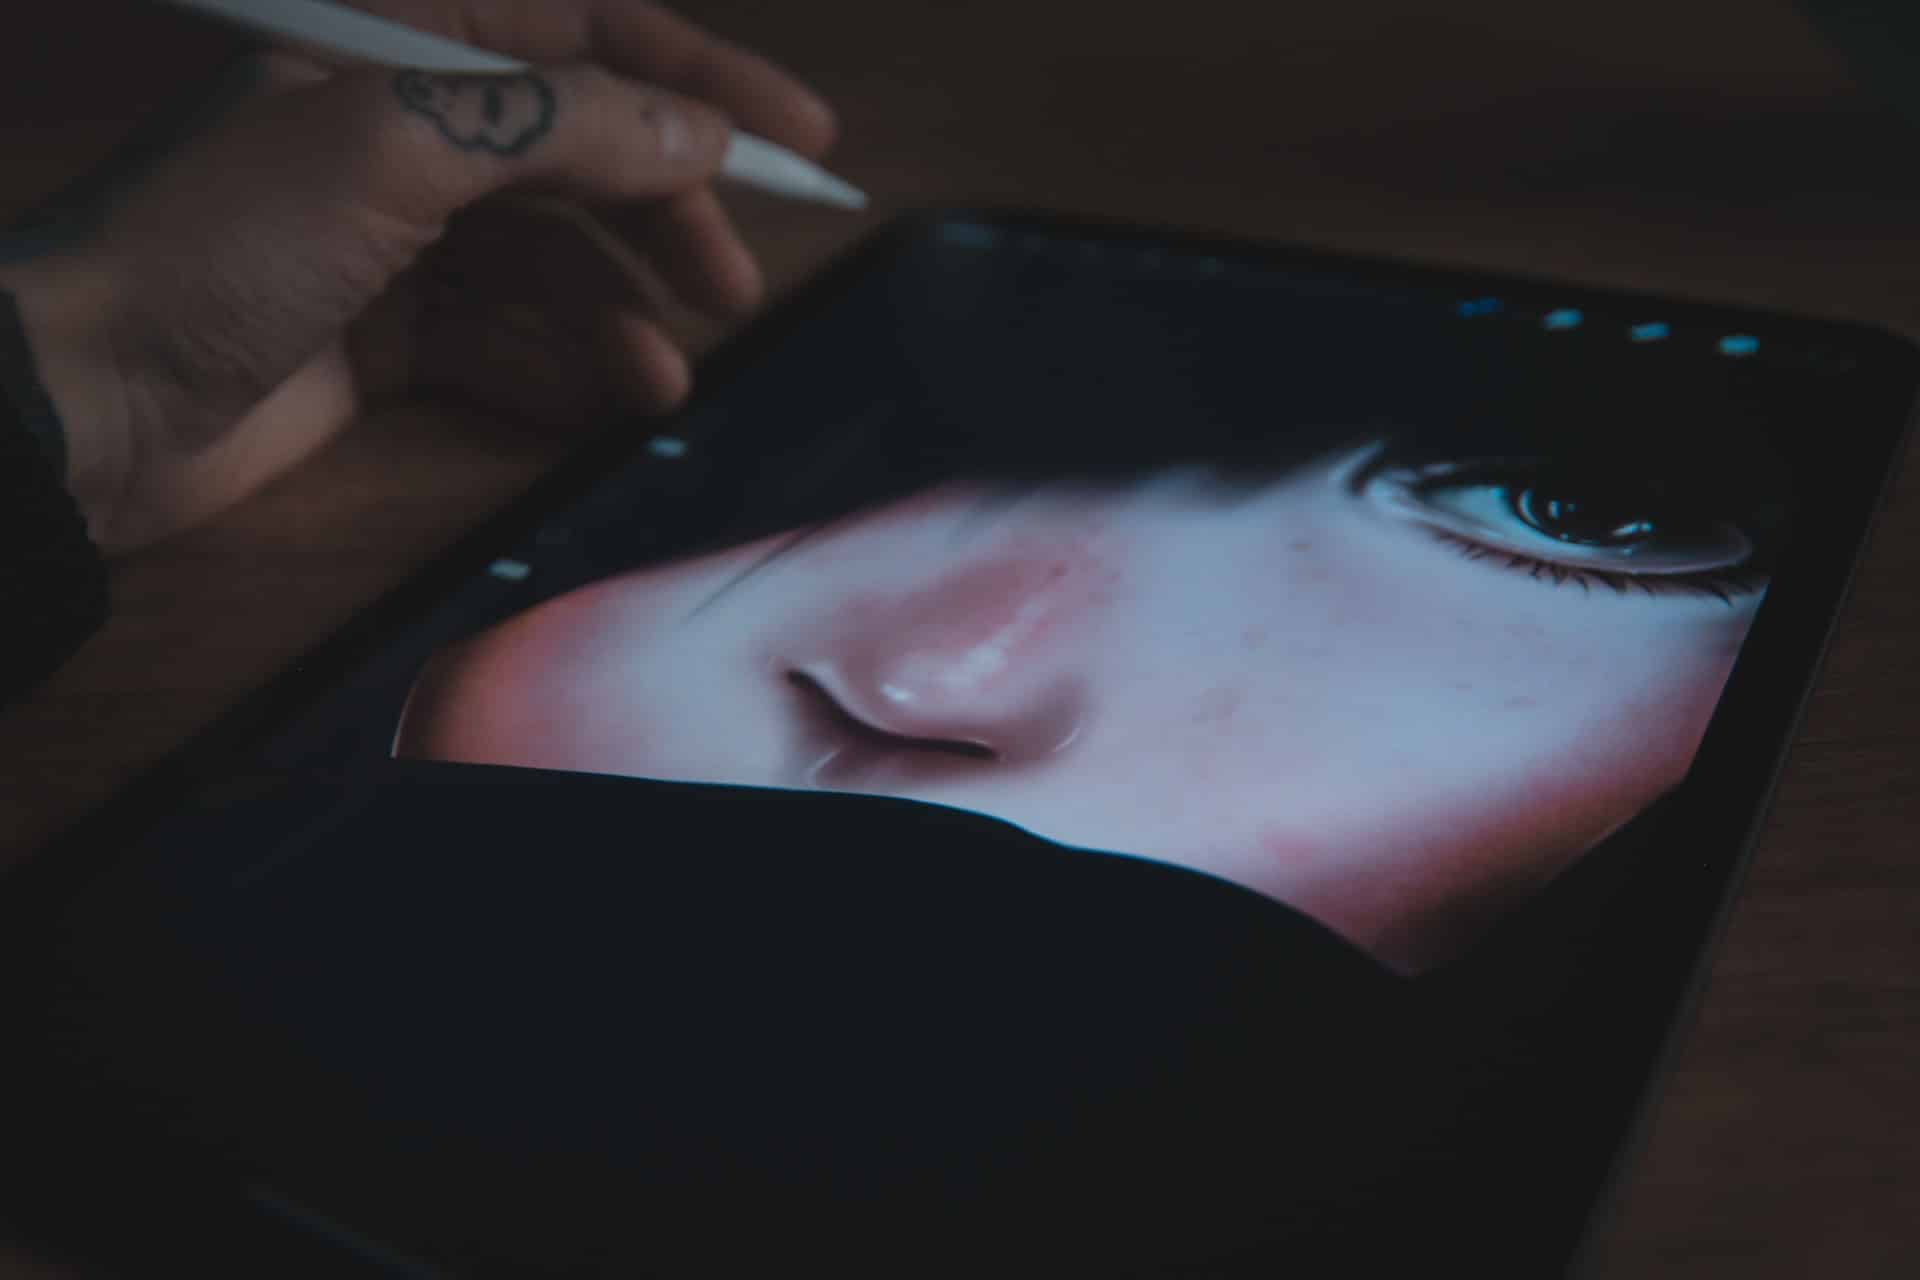 drawing face on iPad